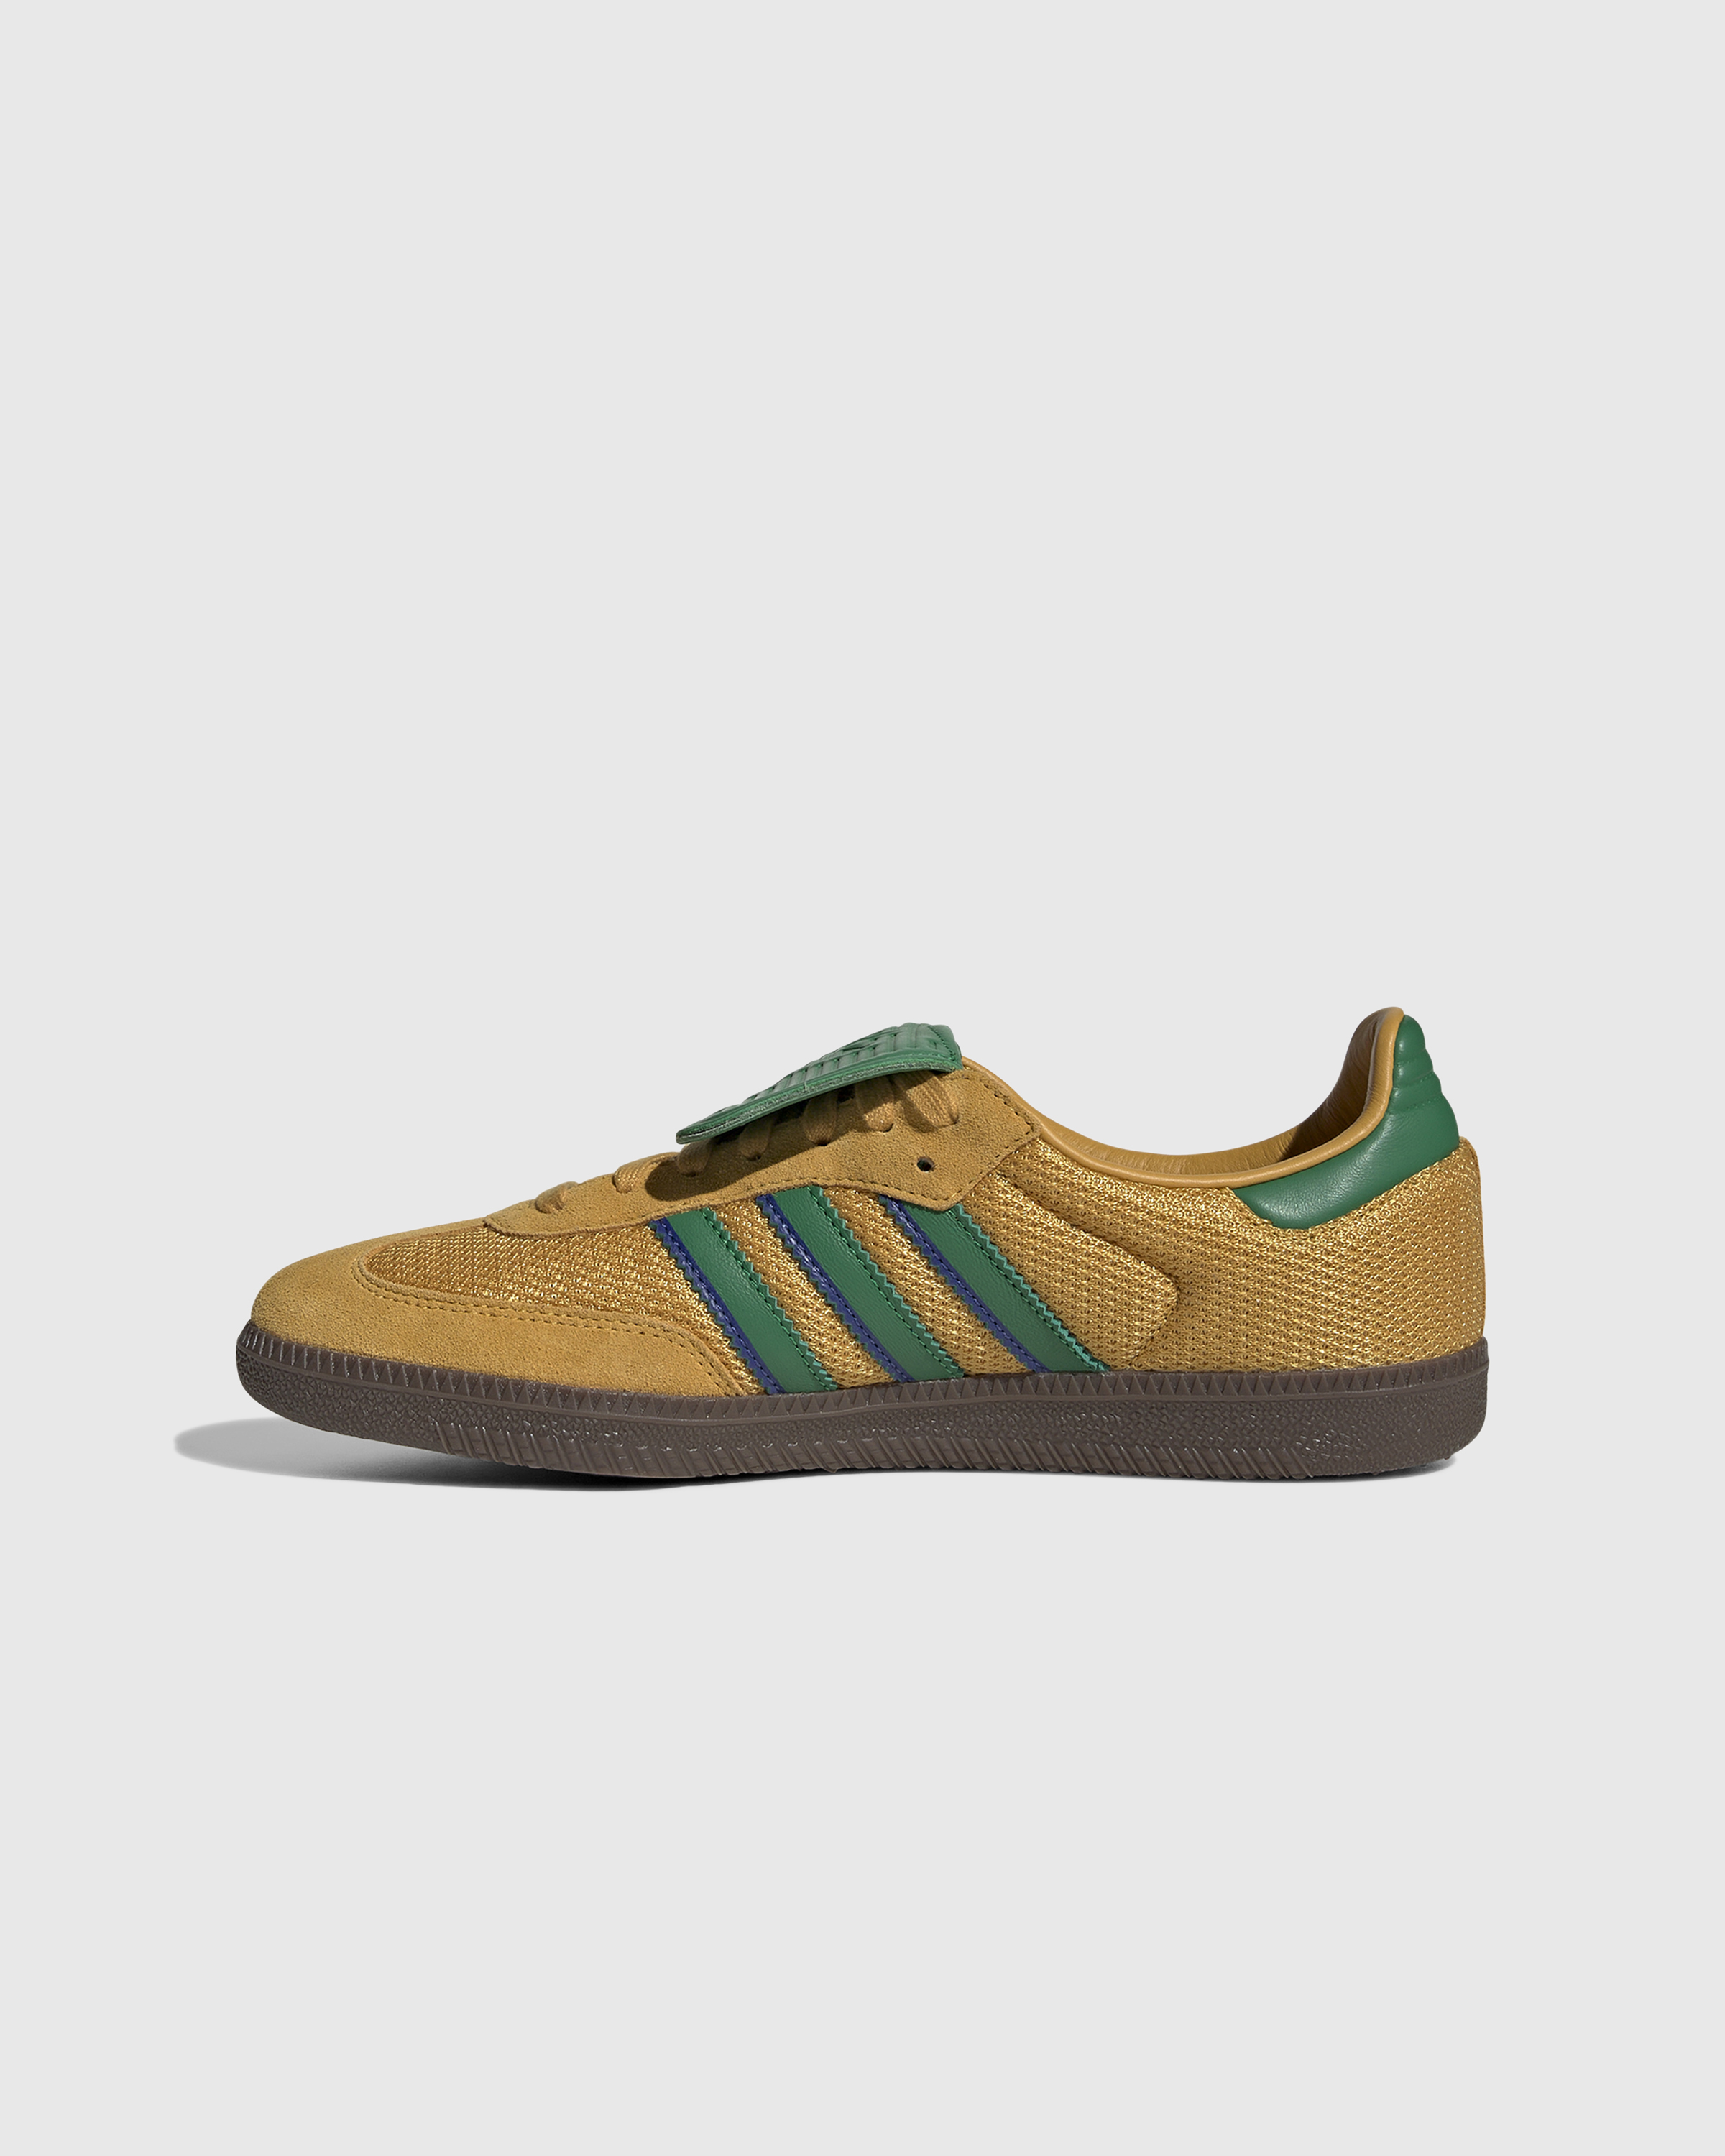 Adidas – Samba LT Preyel/Green/Gum - Low Top Sneakers - Orange - Image 2